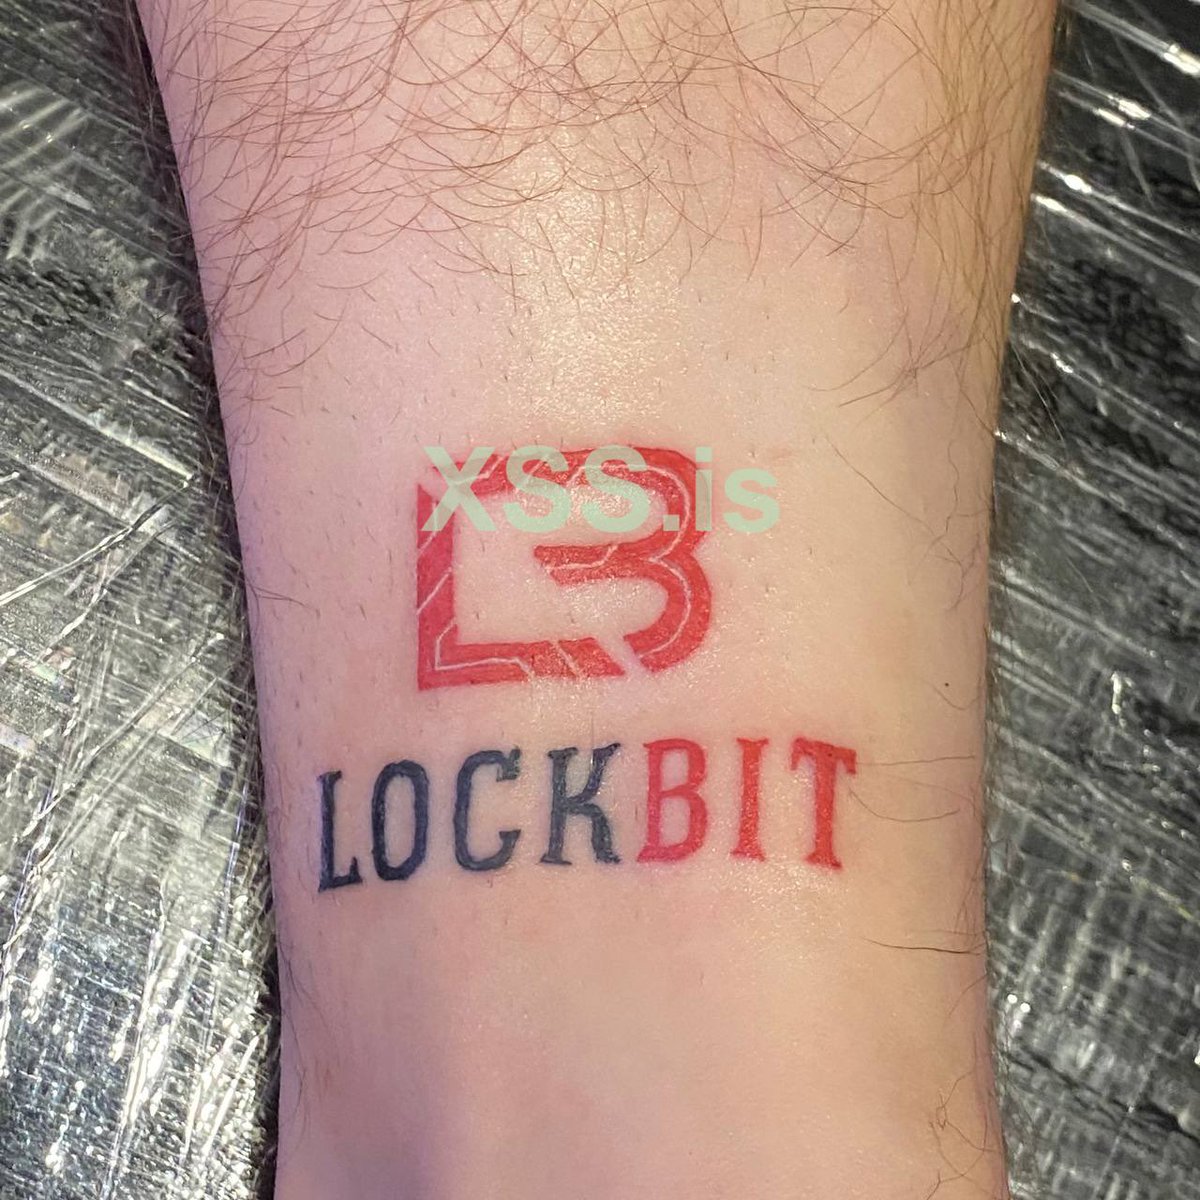 Anyone know a good tattoo removal place? #lockbit